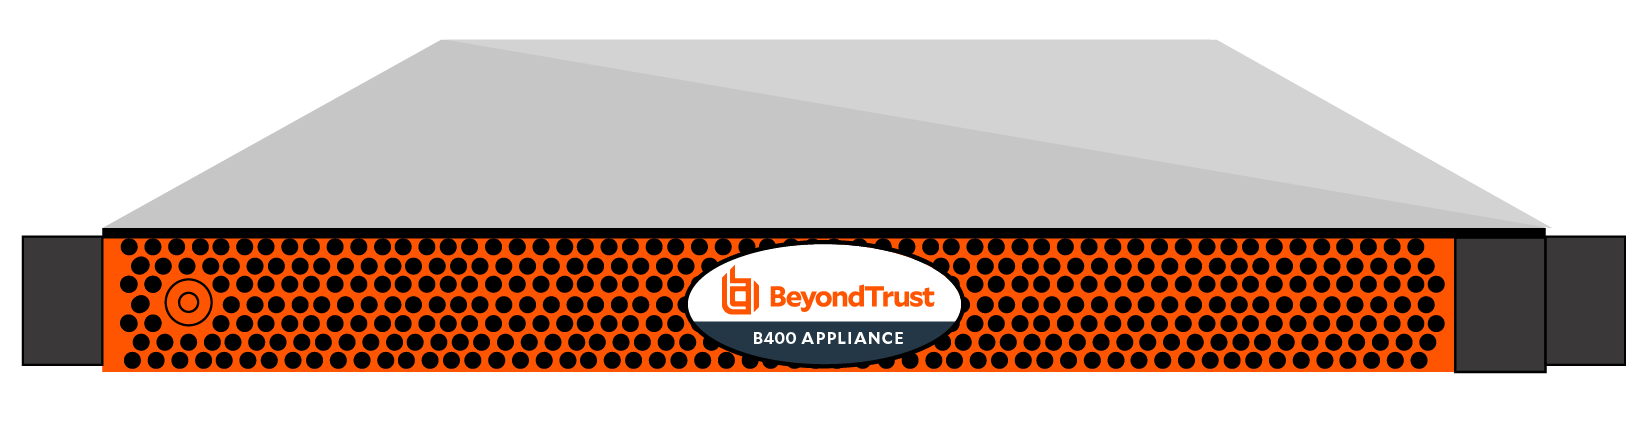 BeyondTrust B400 B Series Appliance